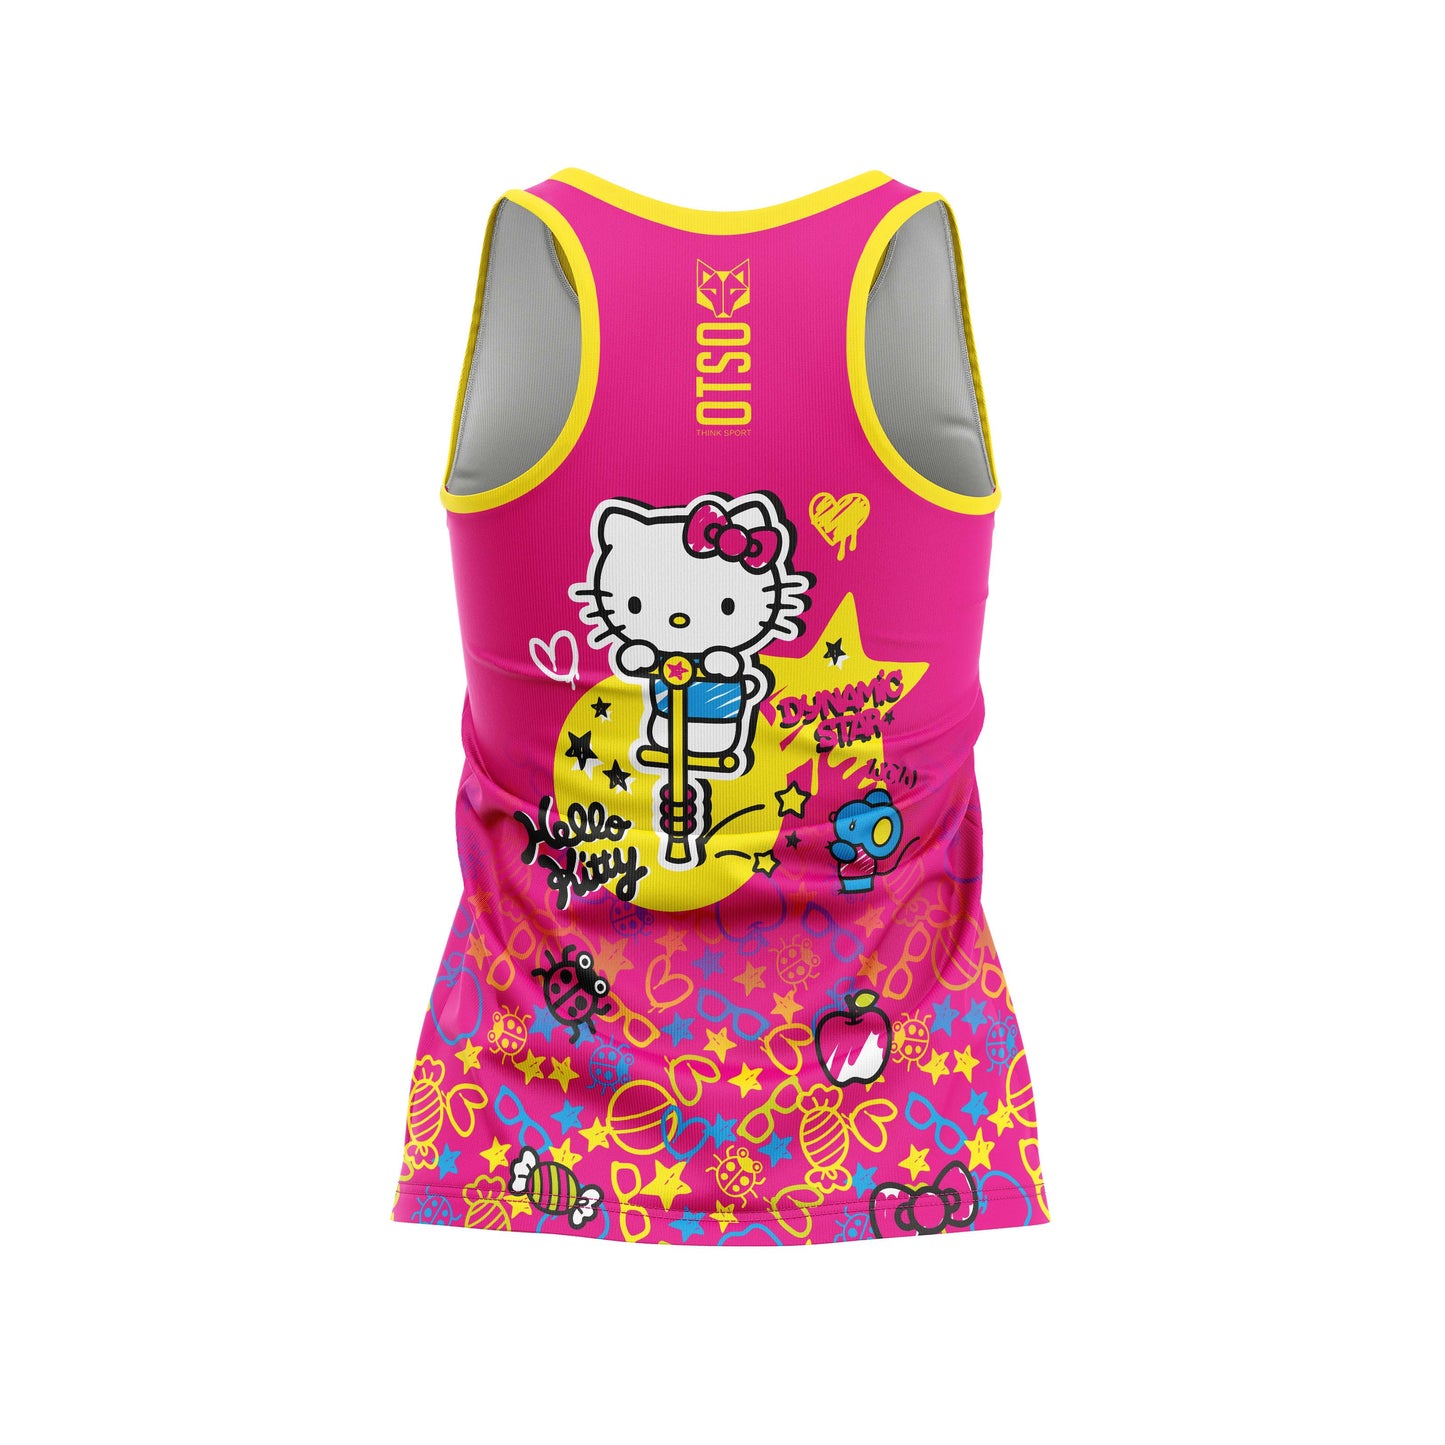 Girls and women's sleeveless t-shirt - Hello Kitty Sparkle